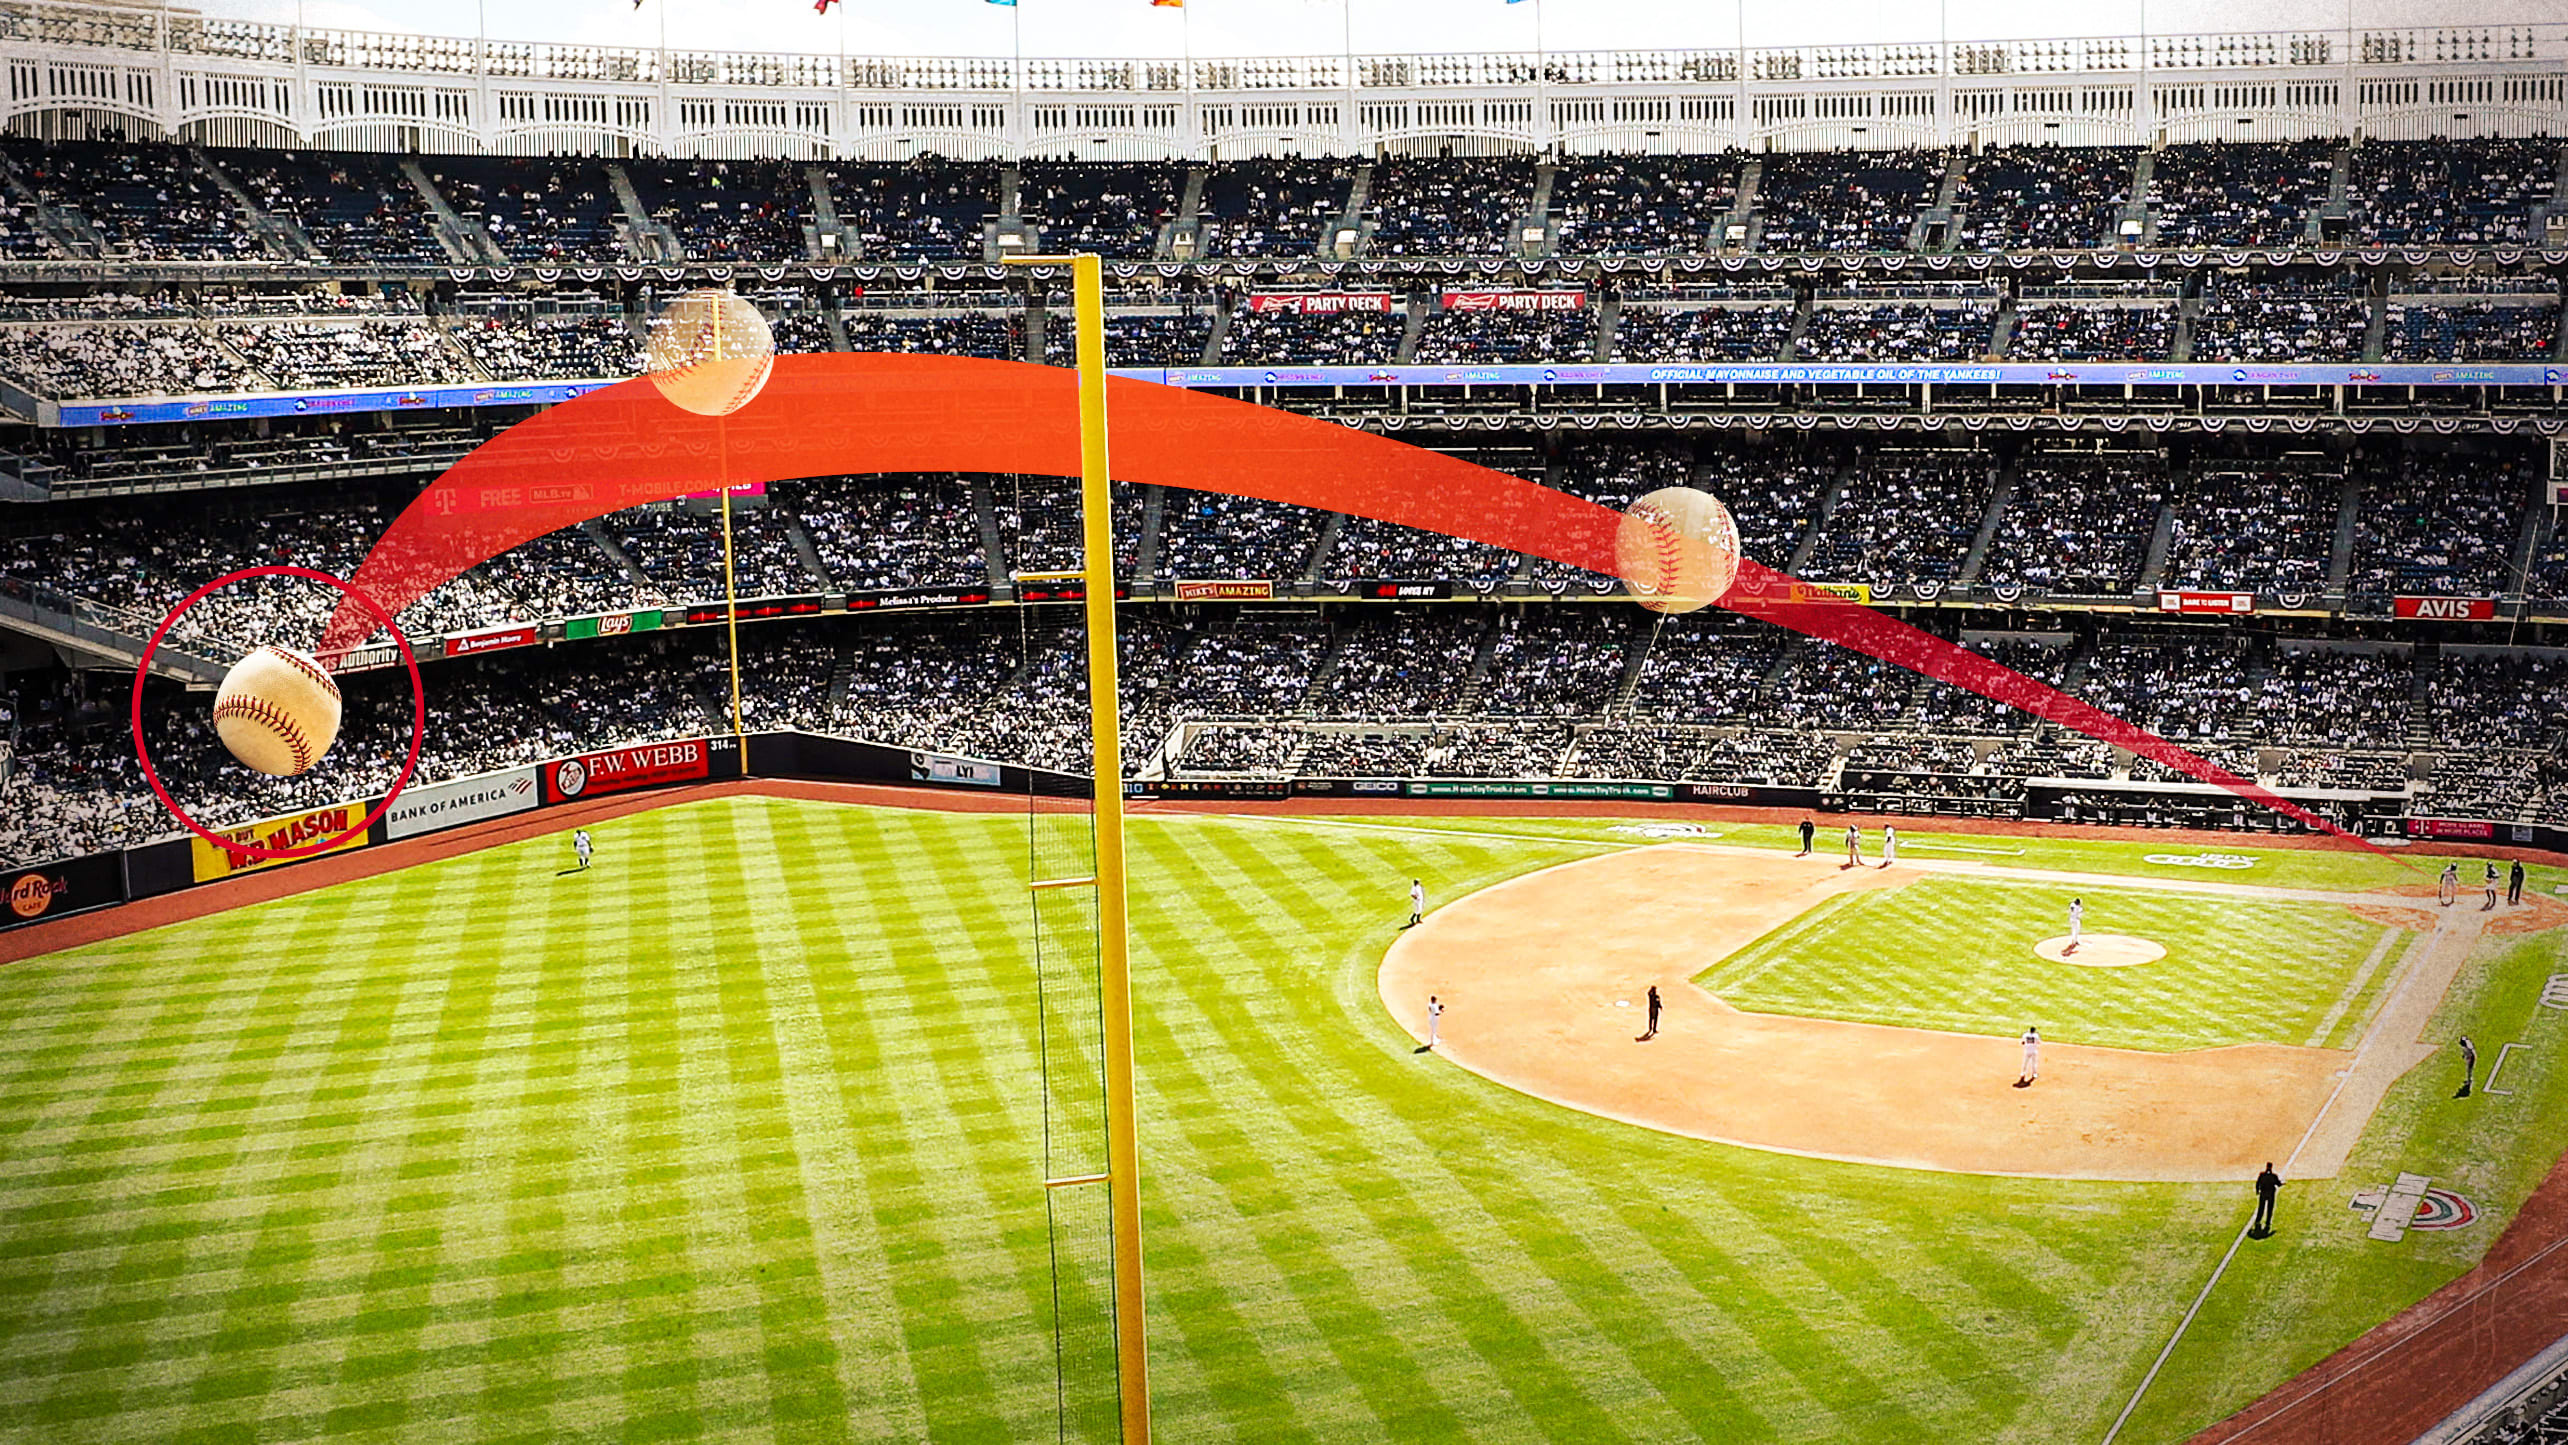 A designed image of Yankee Stadium showing the flight of a baseball